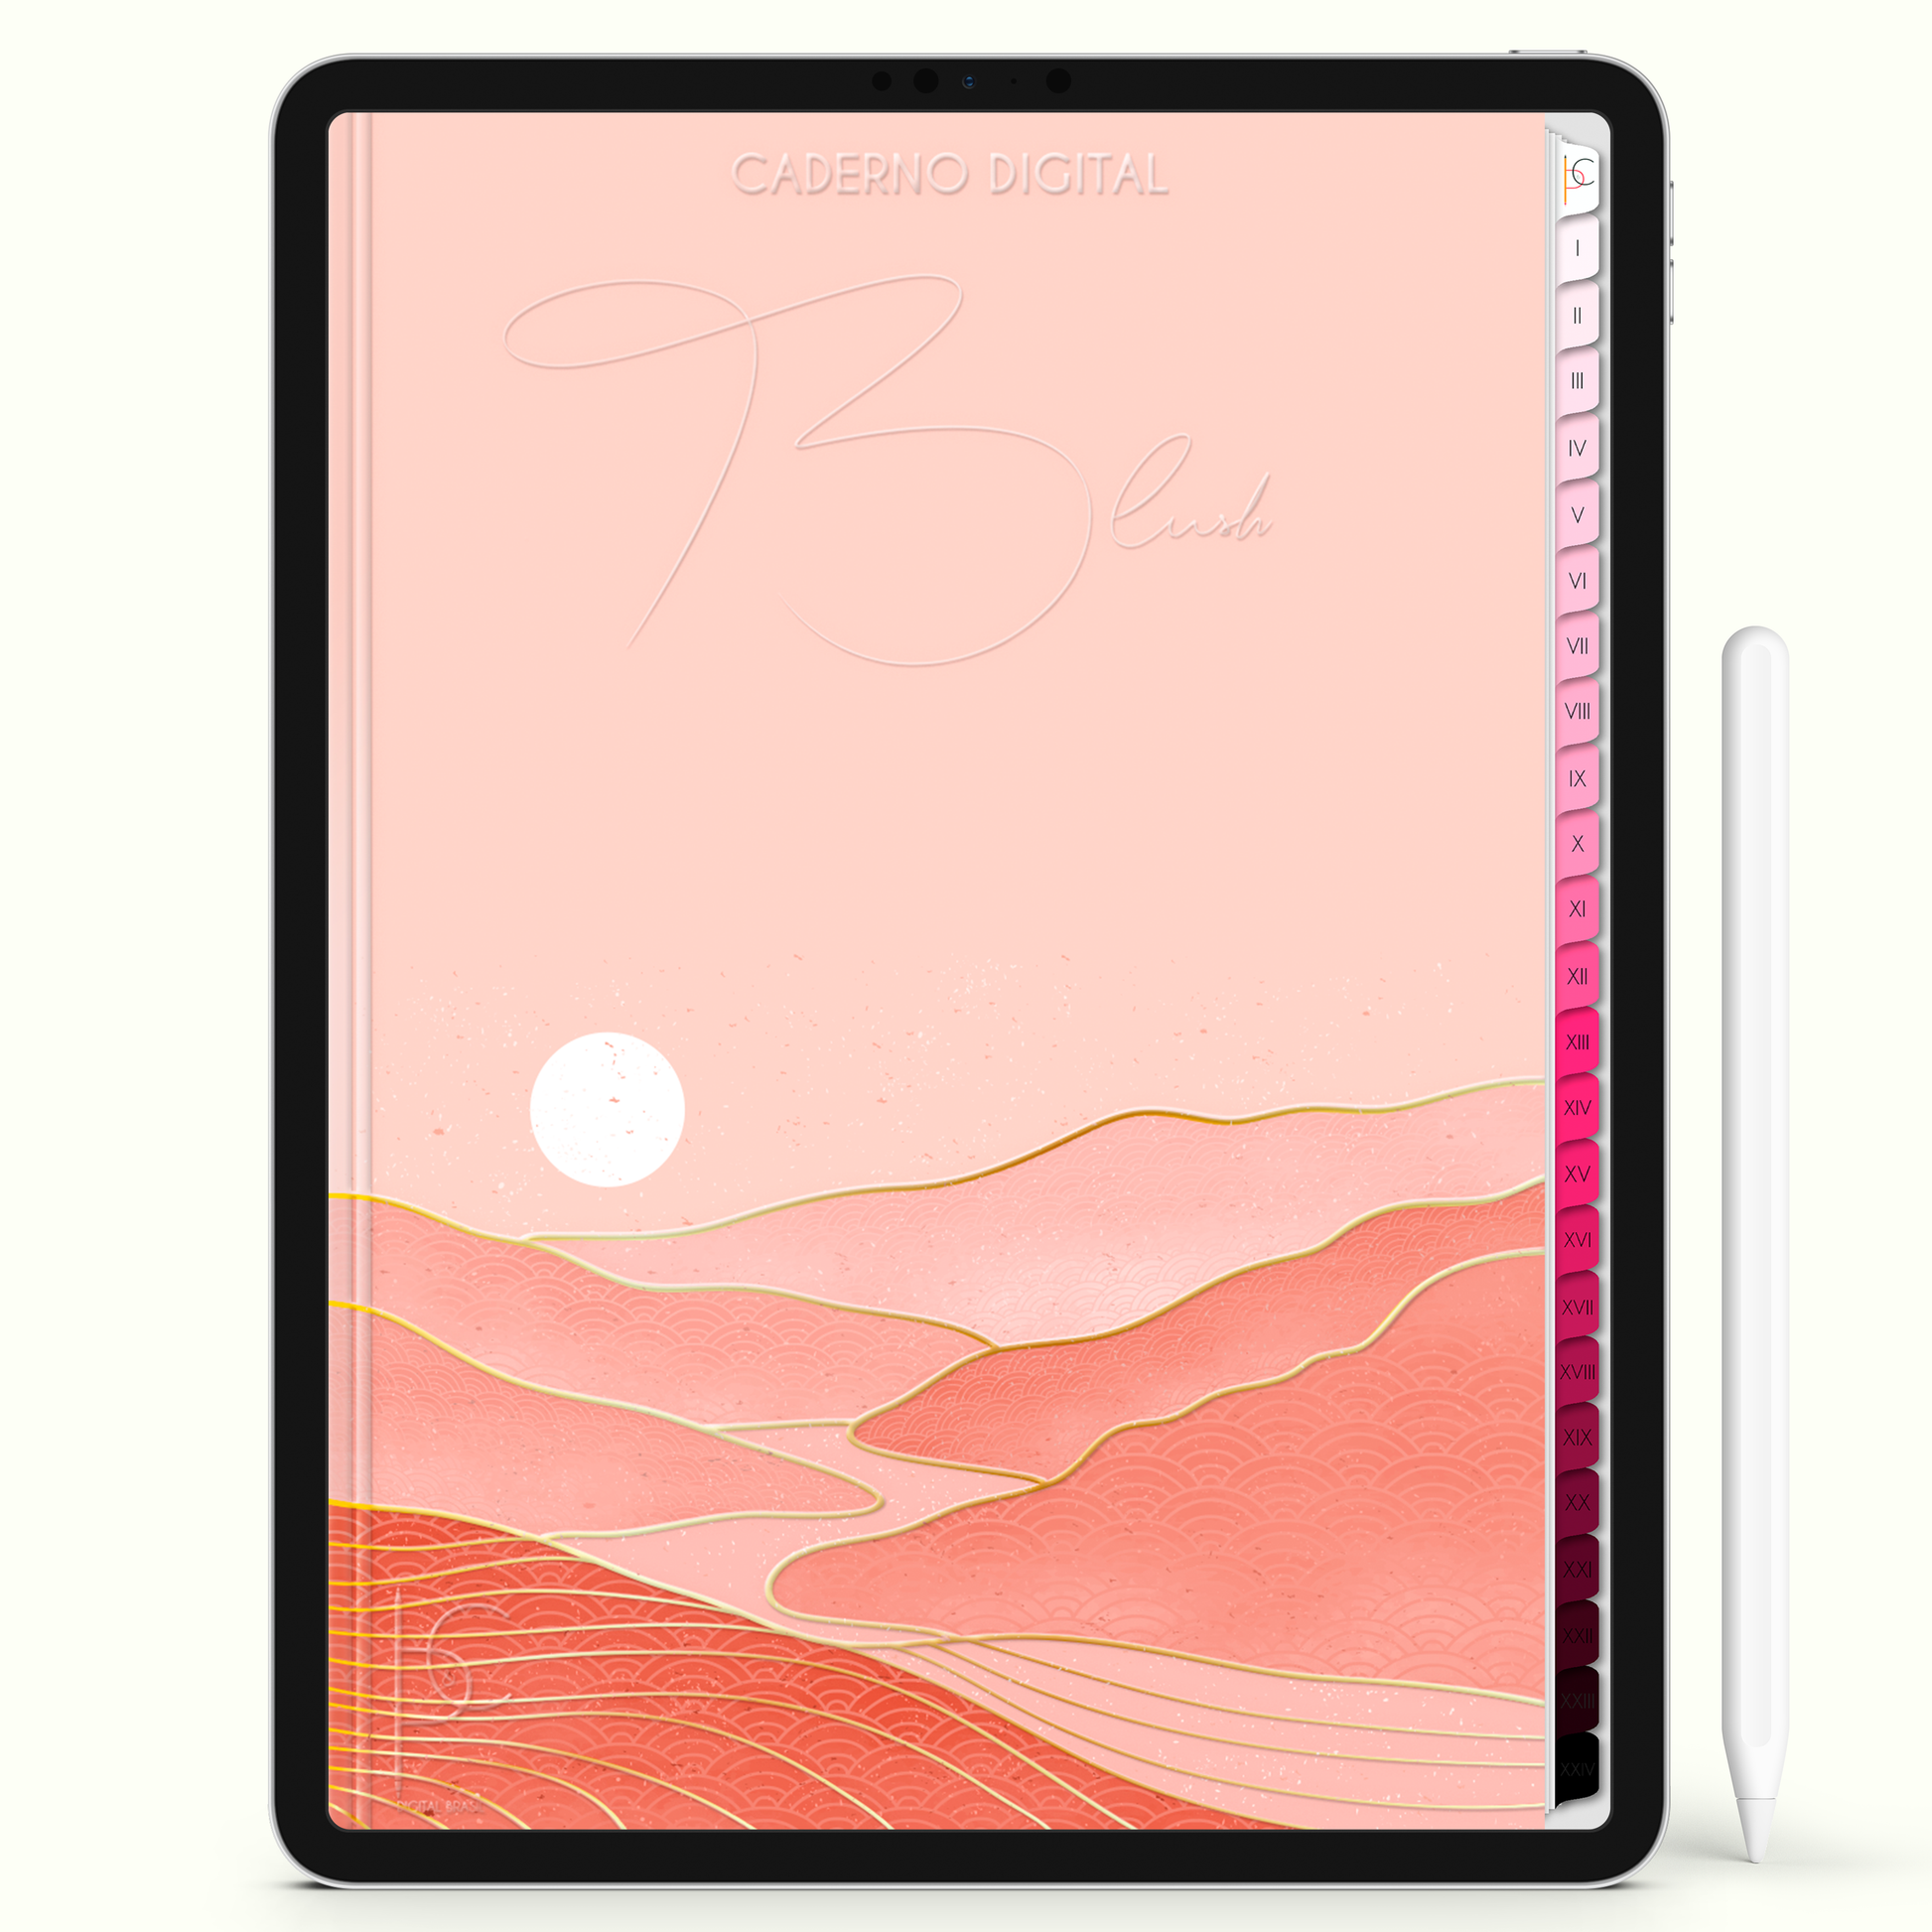 Caderno Digital Blush Love Minimal 24 Matérias • iPad e Tablet Android • Download instantâneo • Sustentável